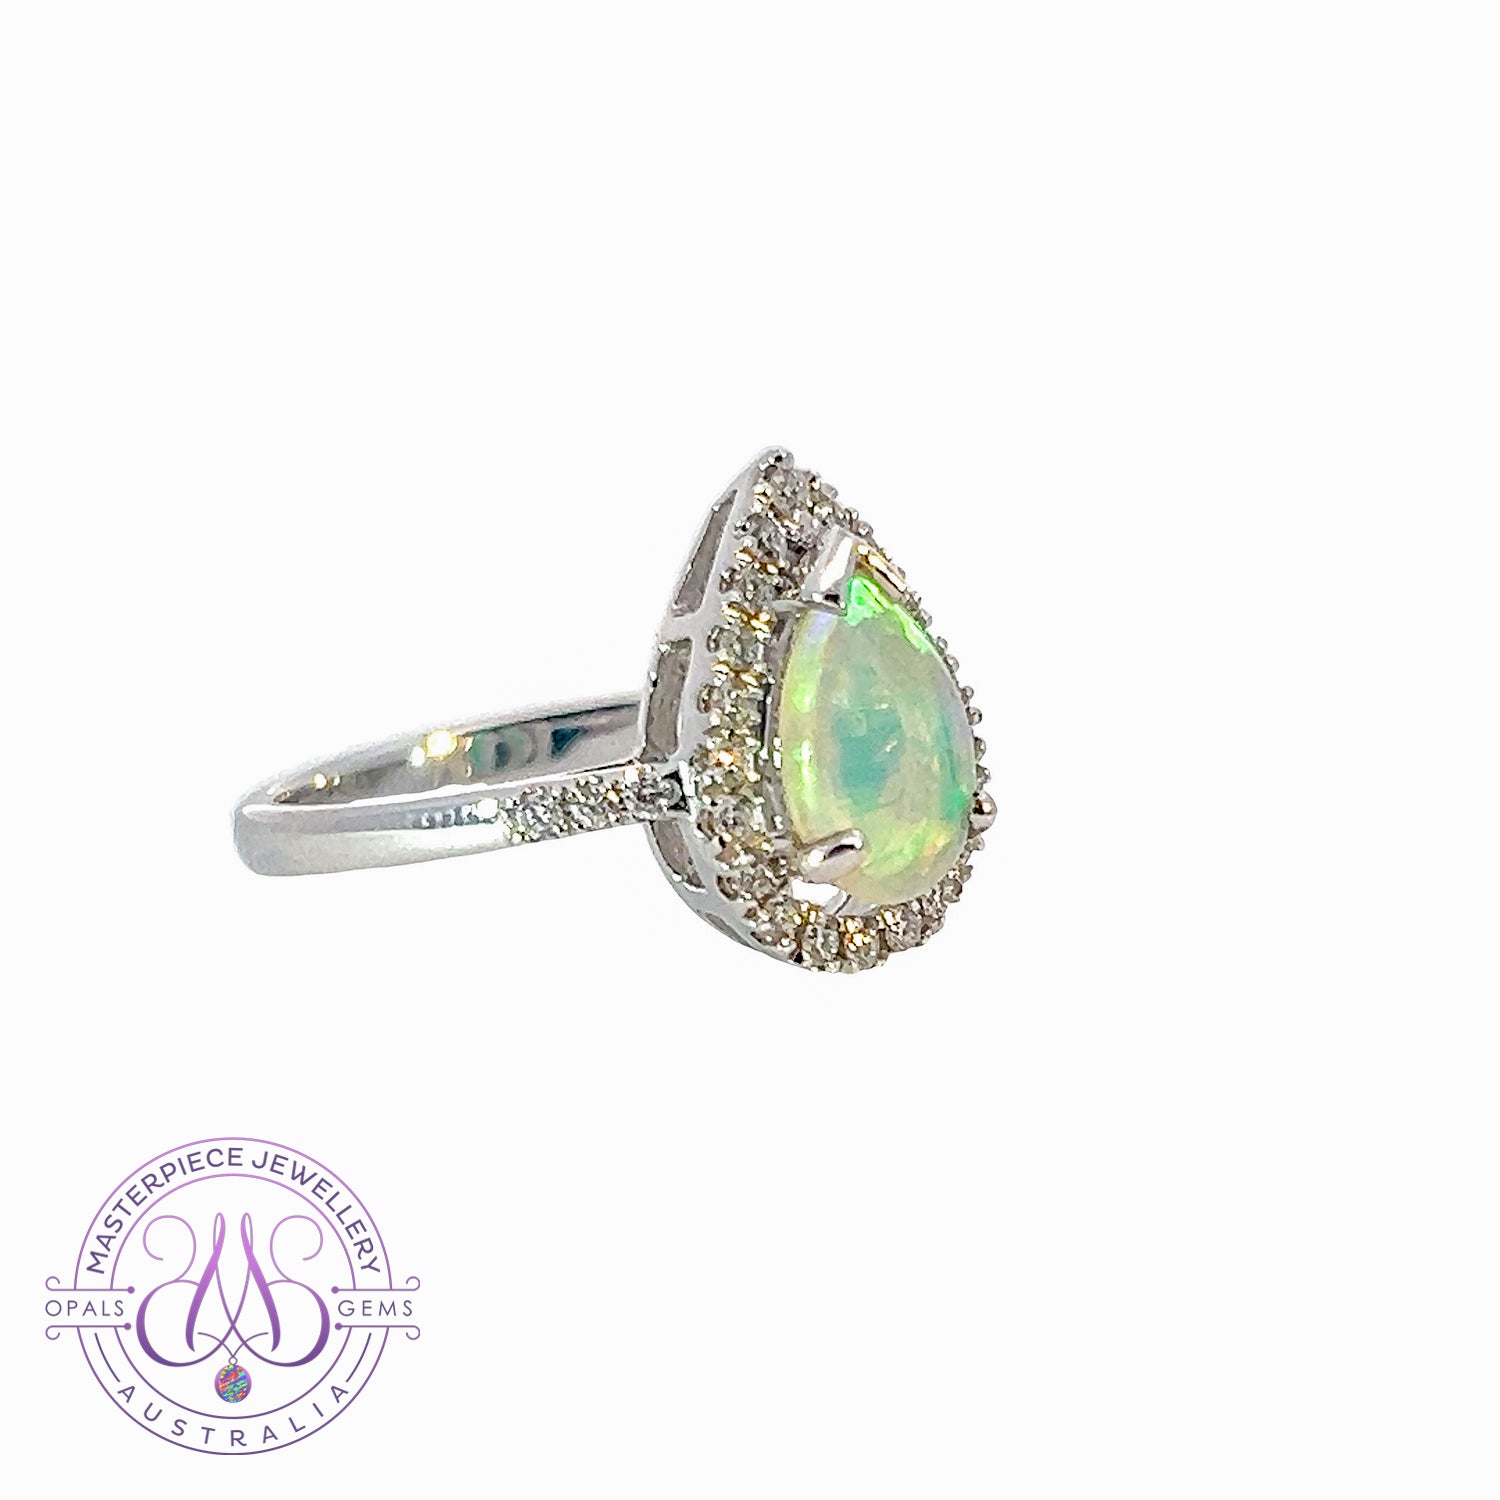 18kt White Gold Pear shape Opal and Diamond ring - Masterpiece Jewellery Opal & Gems Sydney Australia | Online Shop